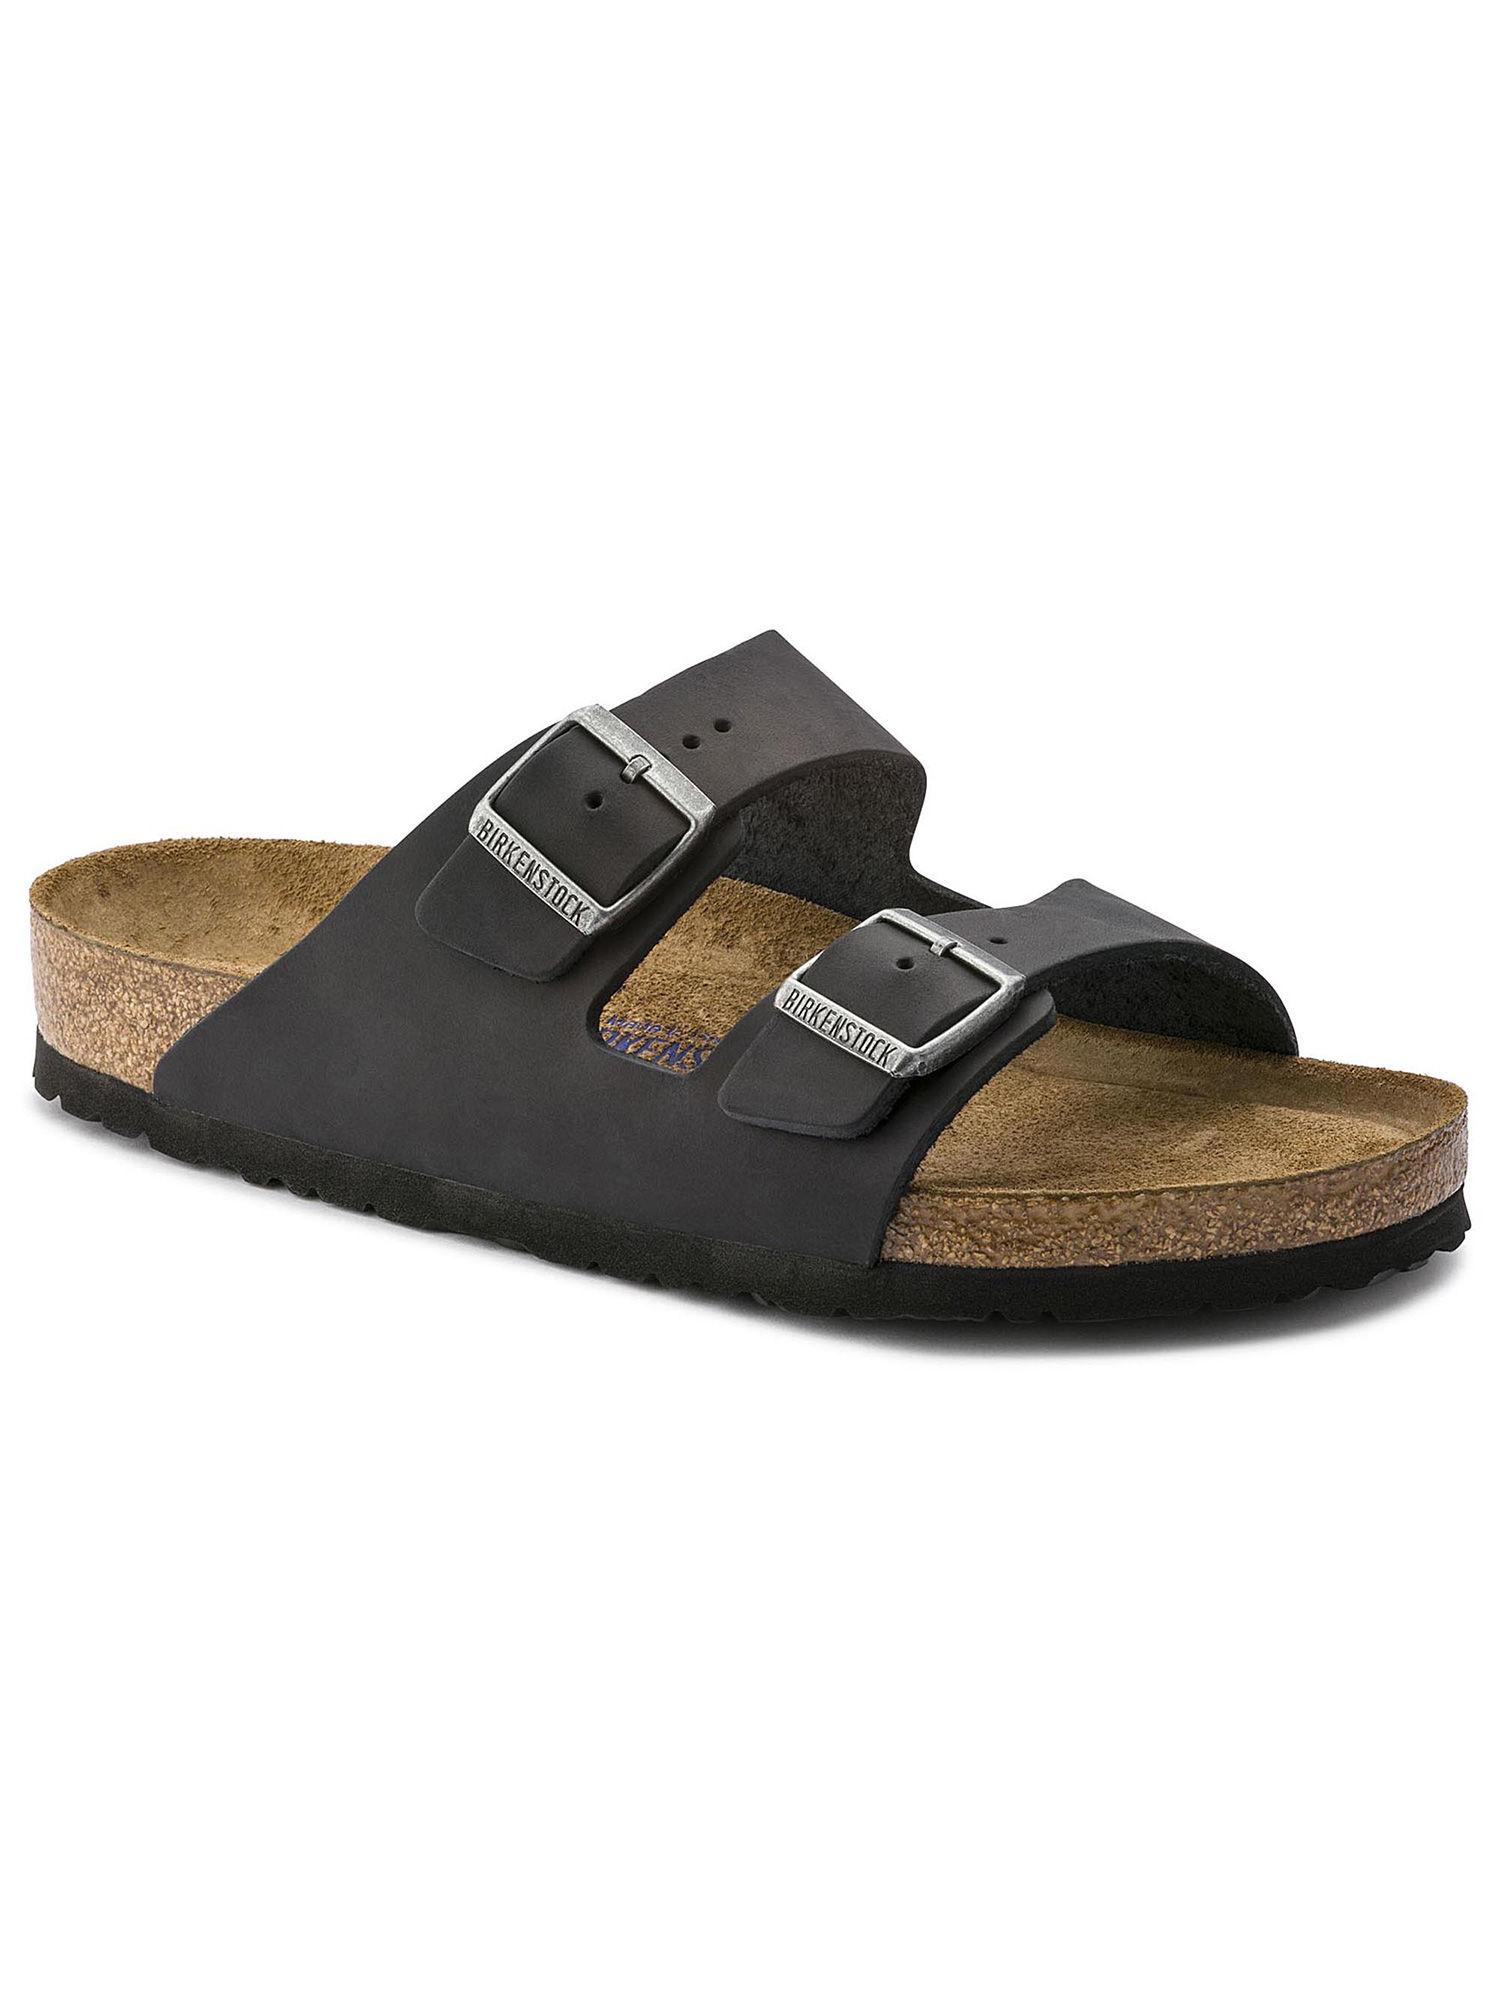 arizona-soft-footbed-oiled-nubuck-leather-black-regular-width-unisex-sandals